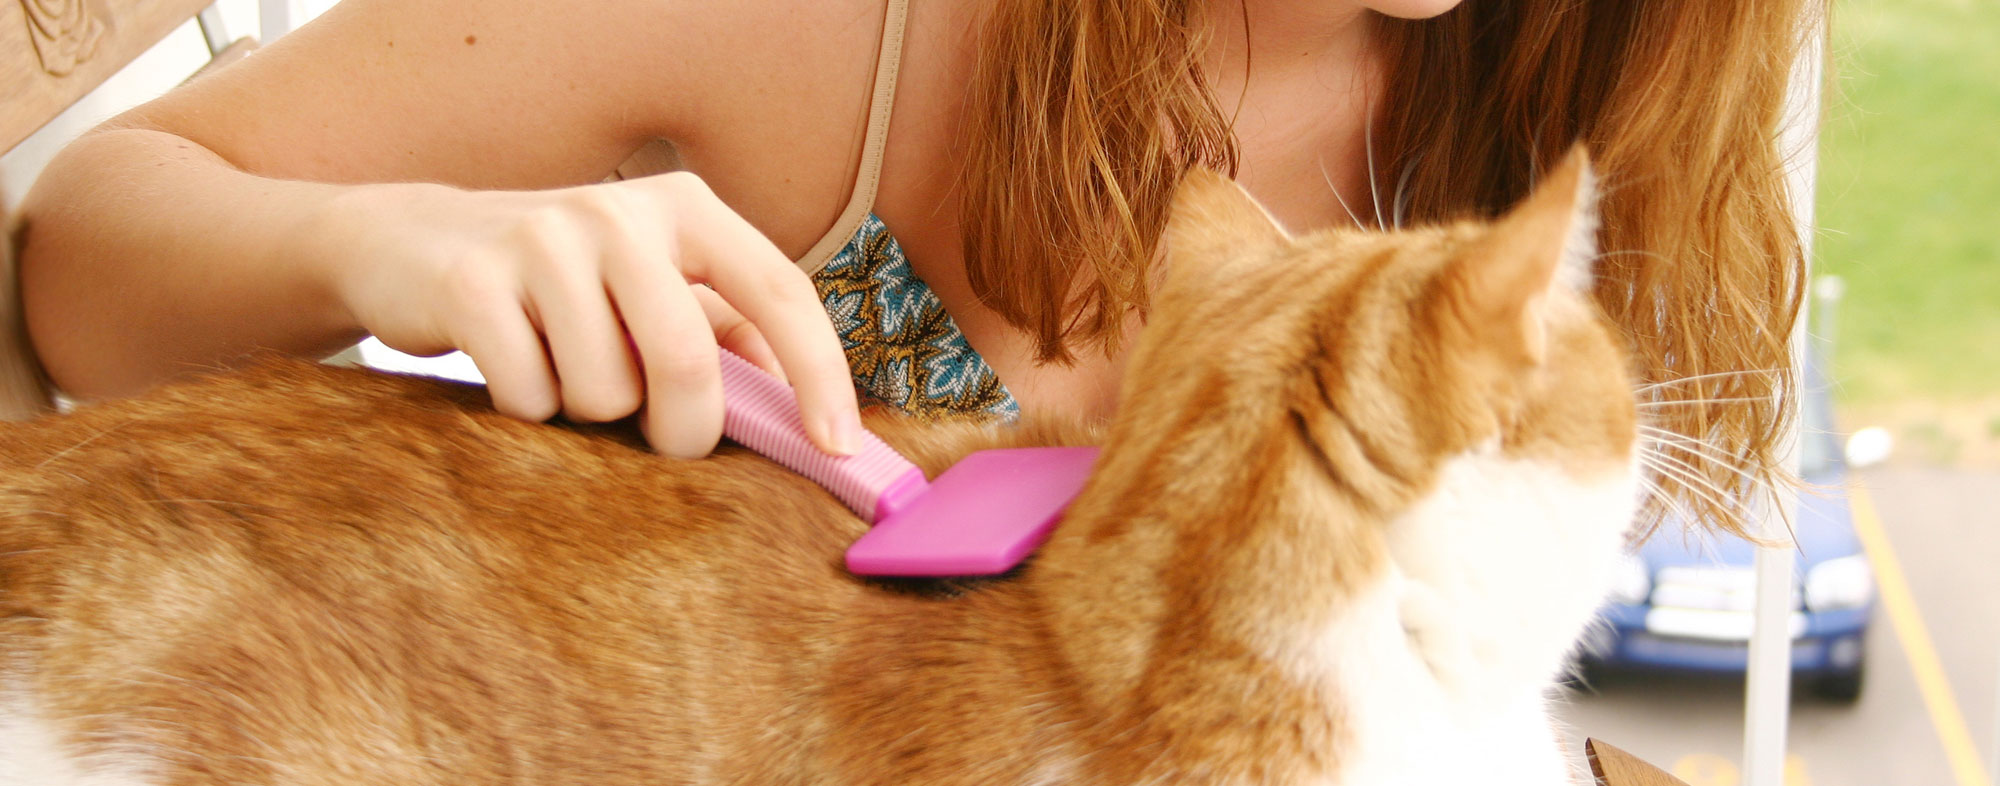 Young girl using brushing her short haired orange pet cat